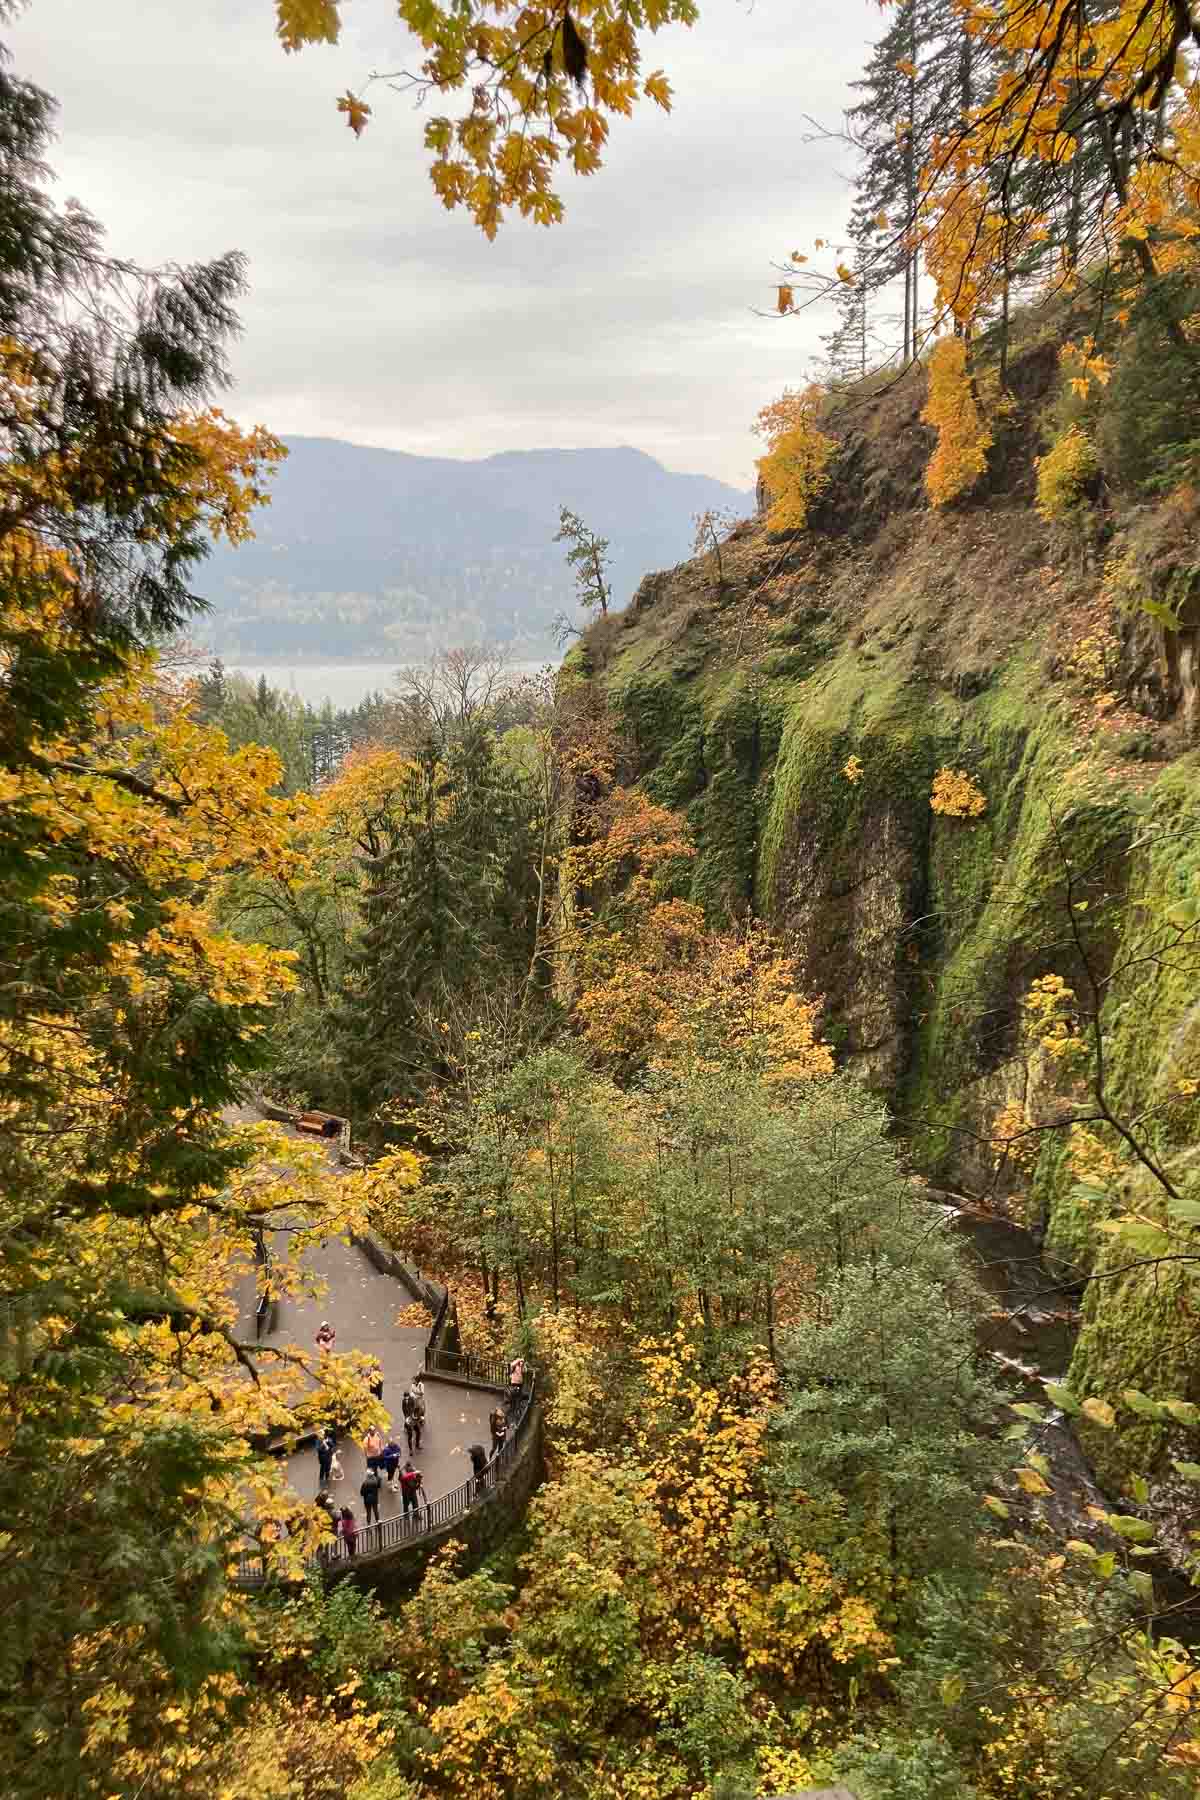 Fall foliage at Multnomah Falls in the Columbia River Gorge, Oregon